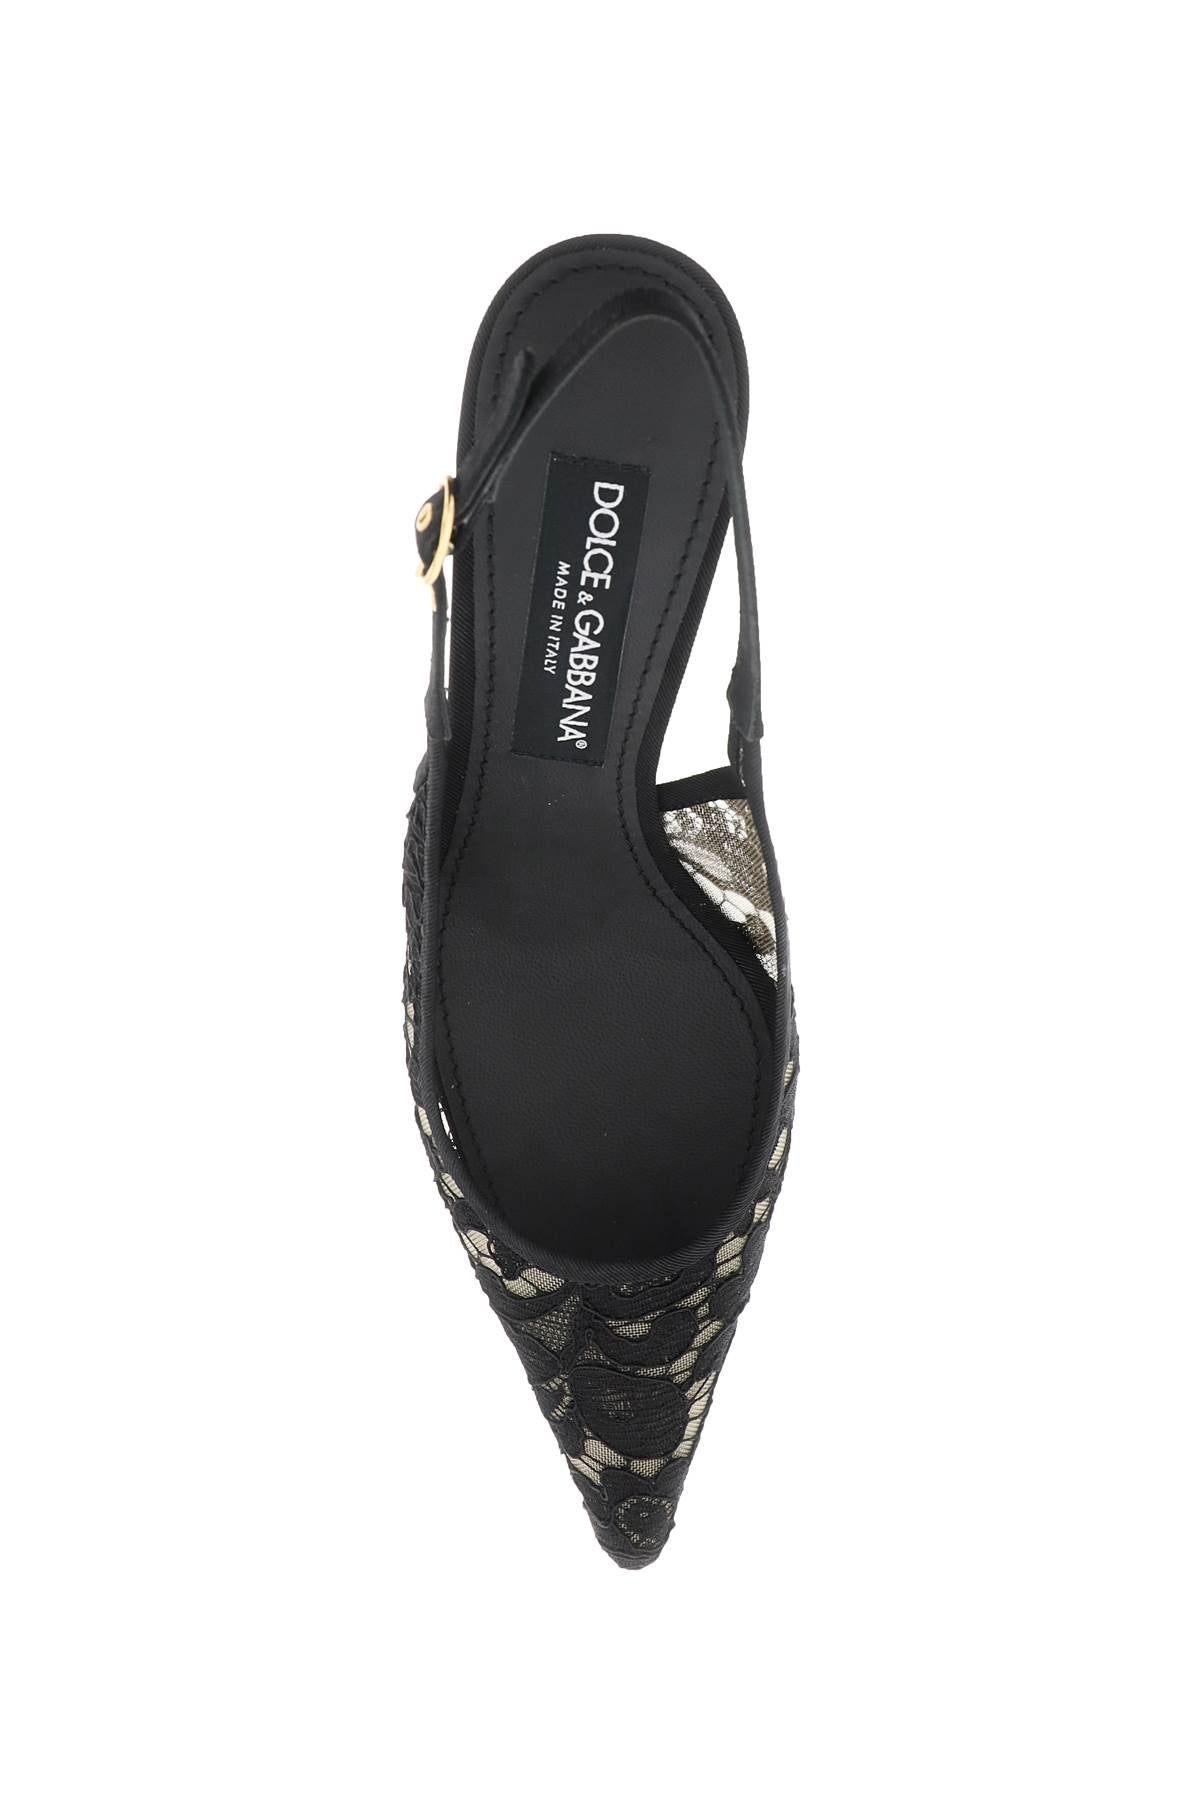 Dolce & Gabbana Dolce & gabbana lace slingback pumps